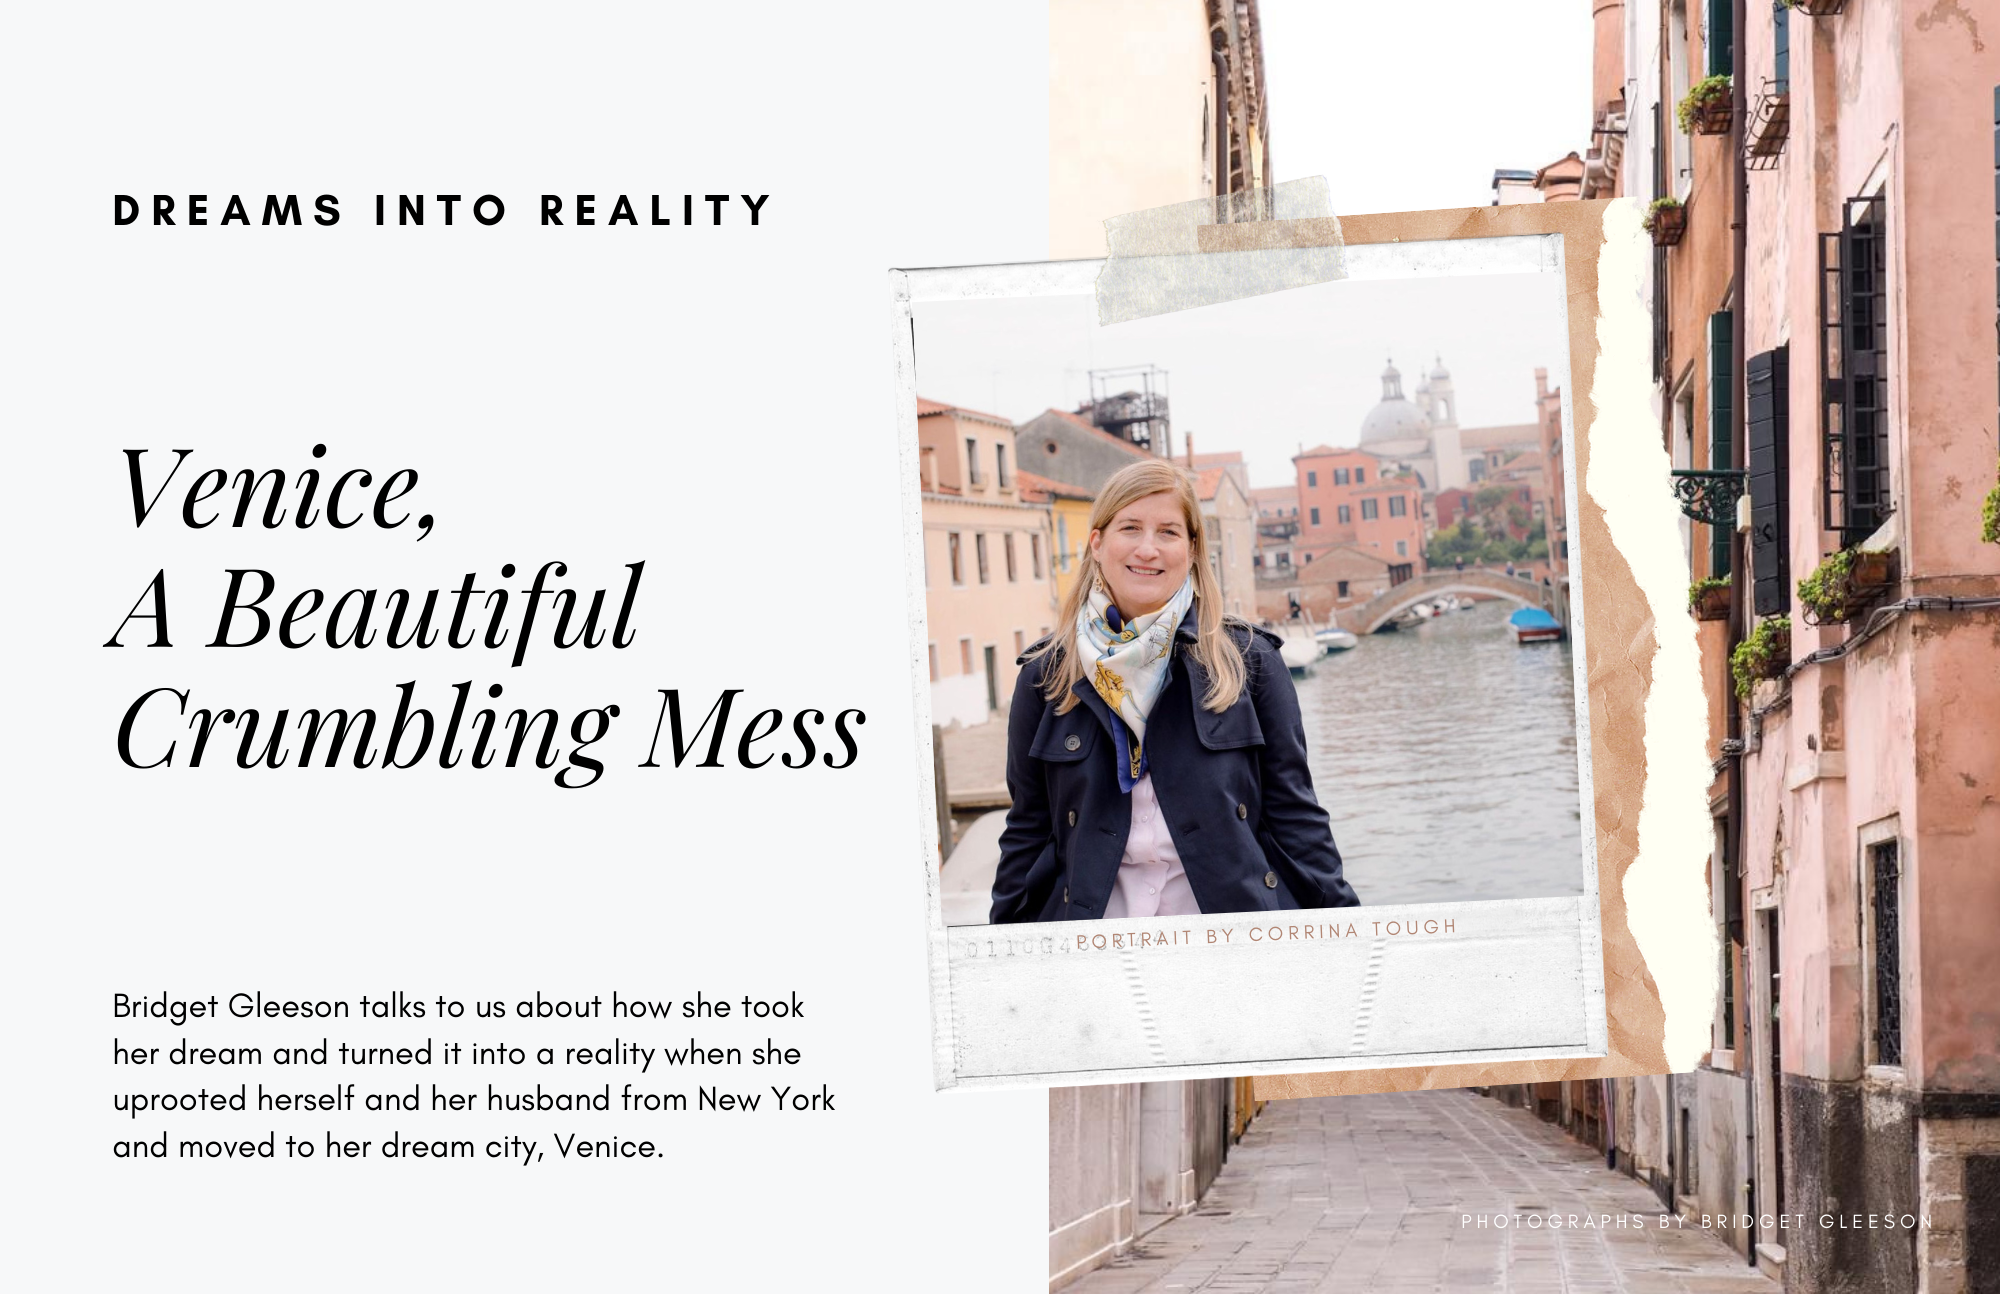 Bridget Gleeson, living in Venice